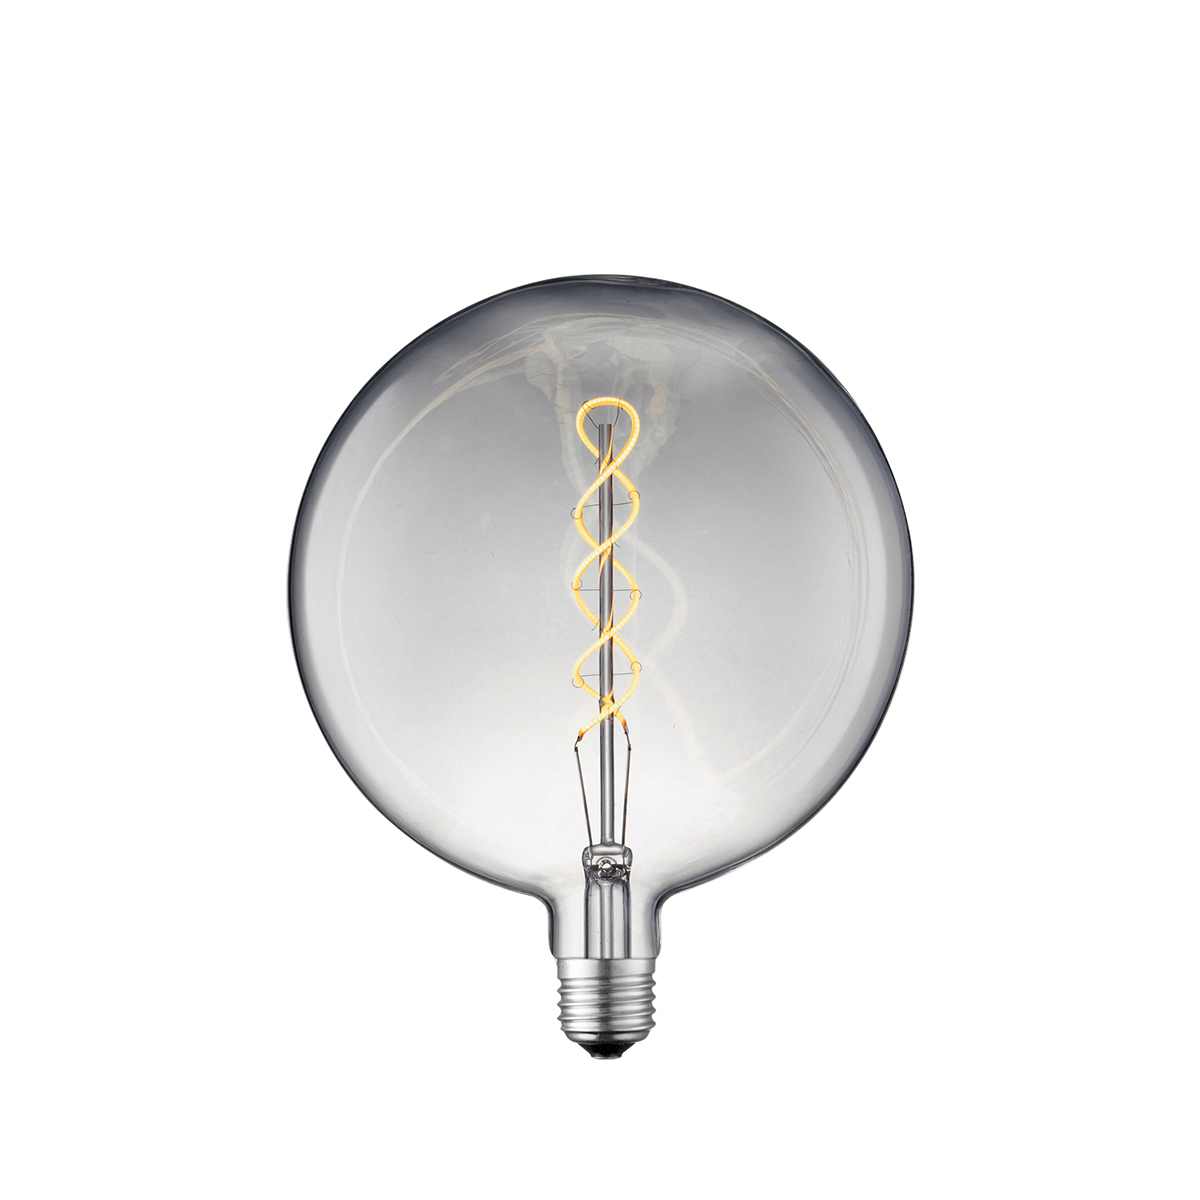 Tangla lighting - TLB-8012-04SM - LED Light Bulb Double Spiral filament - G150 4W smoke - medium - dimmable - E27